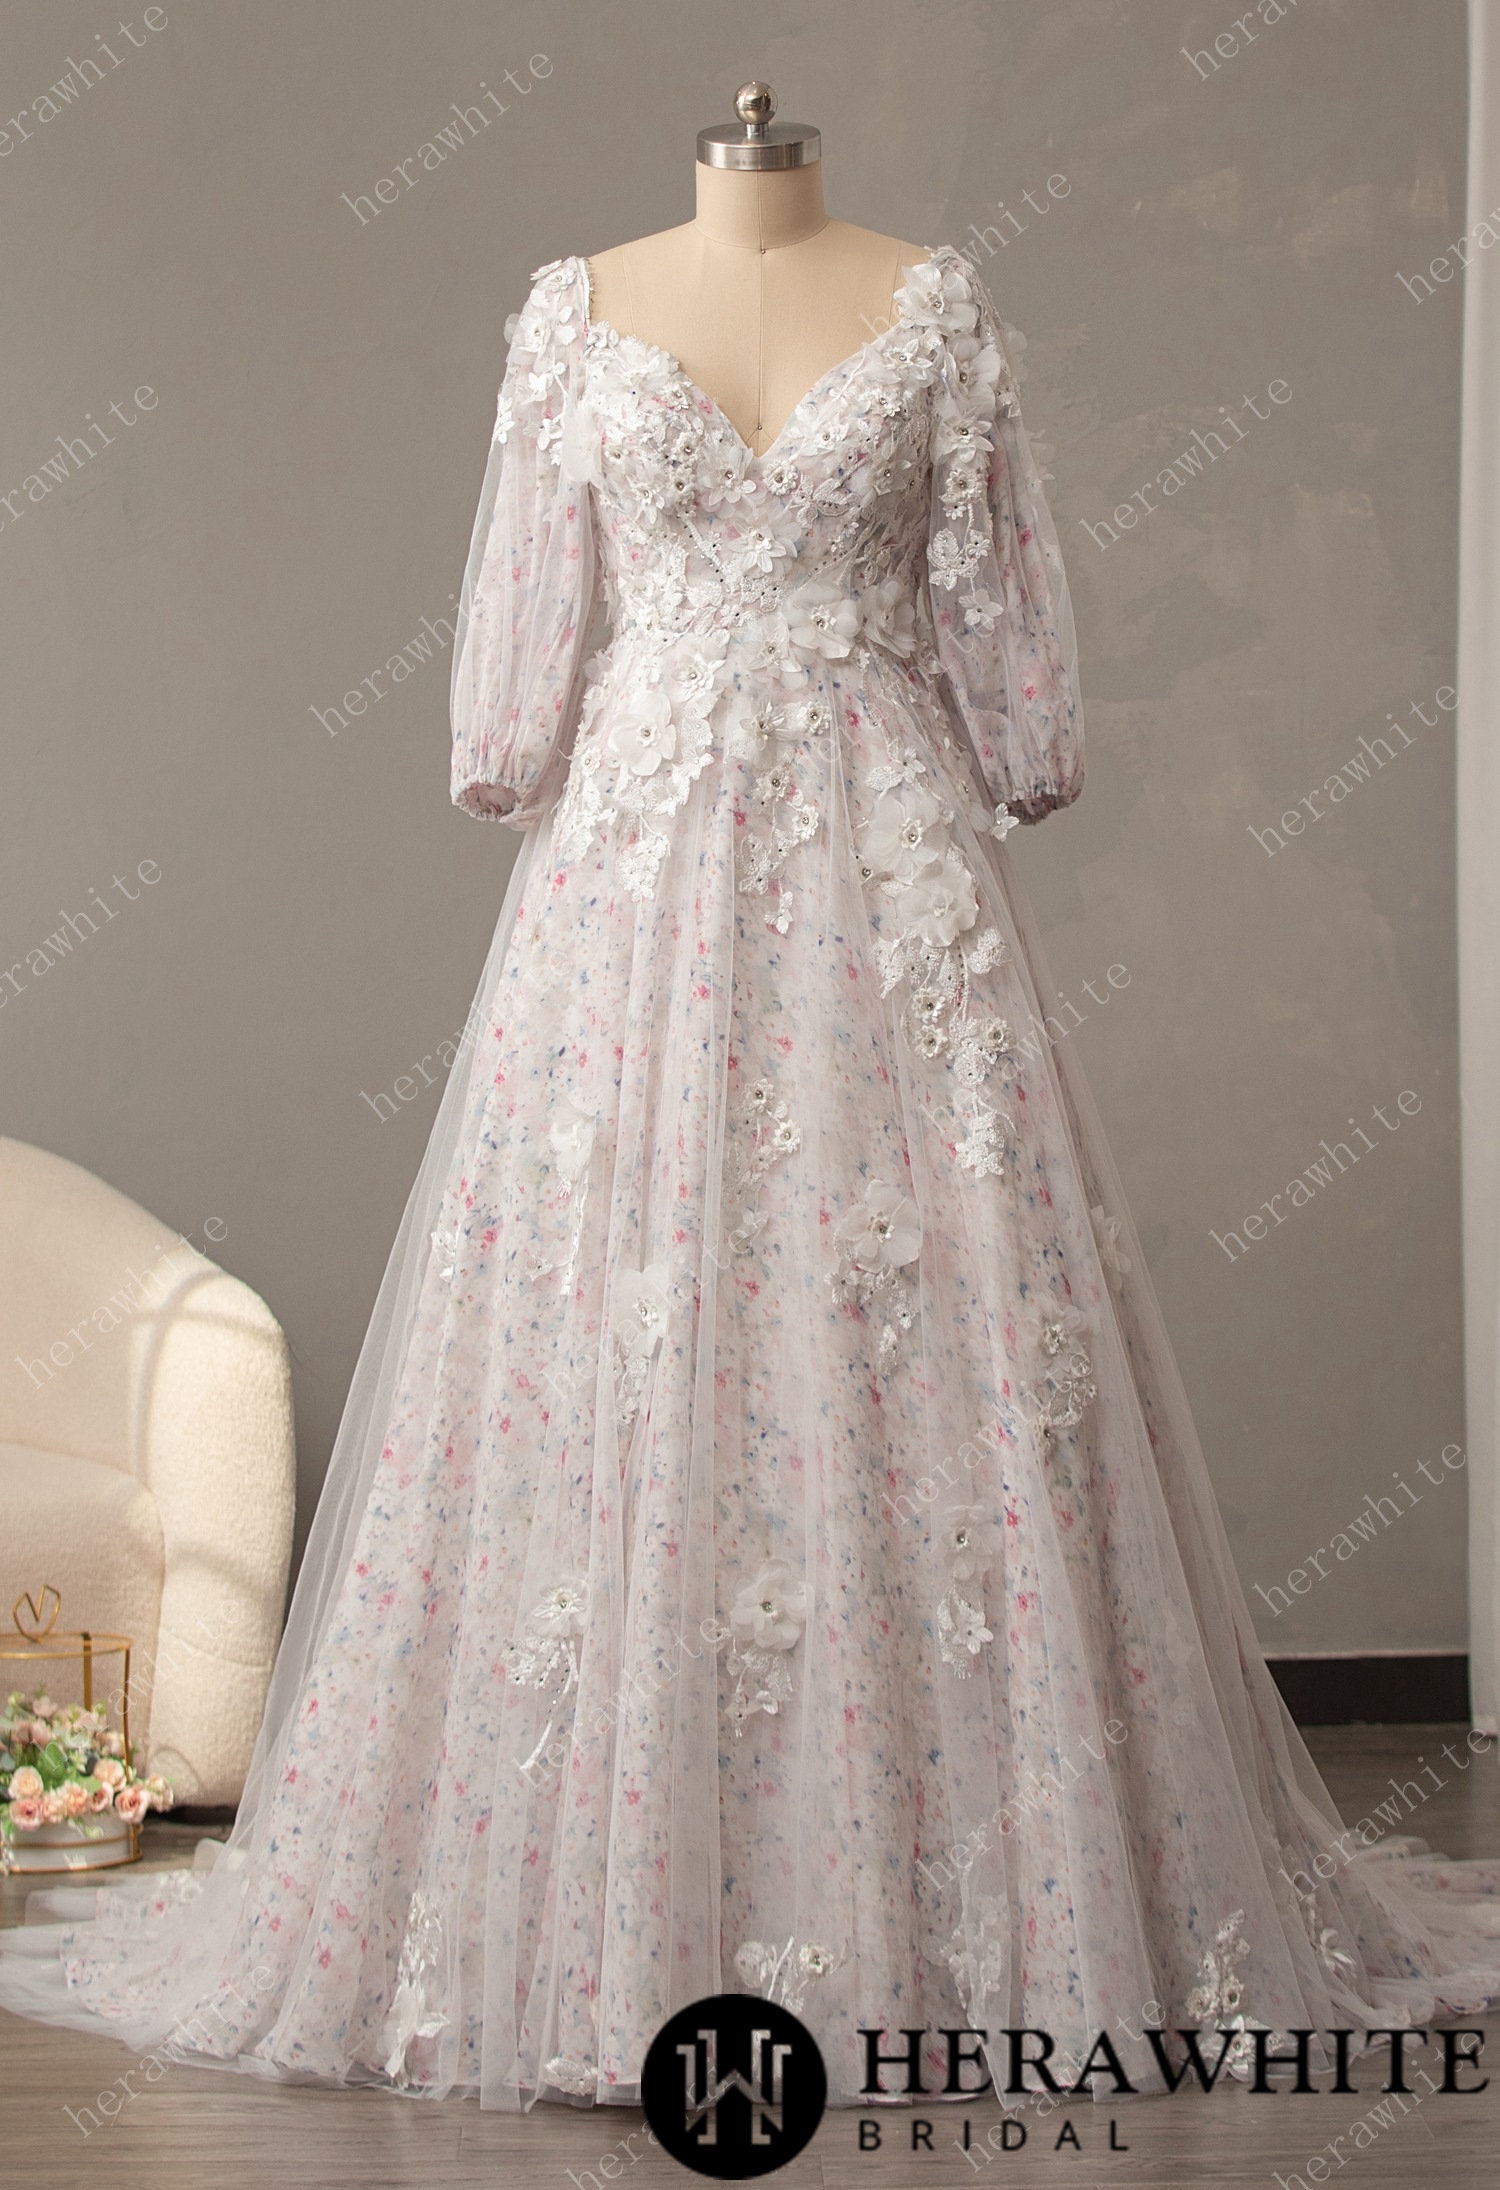 Floral 3D Lace A-Line Wedding Dress with Detachable Sleeve